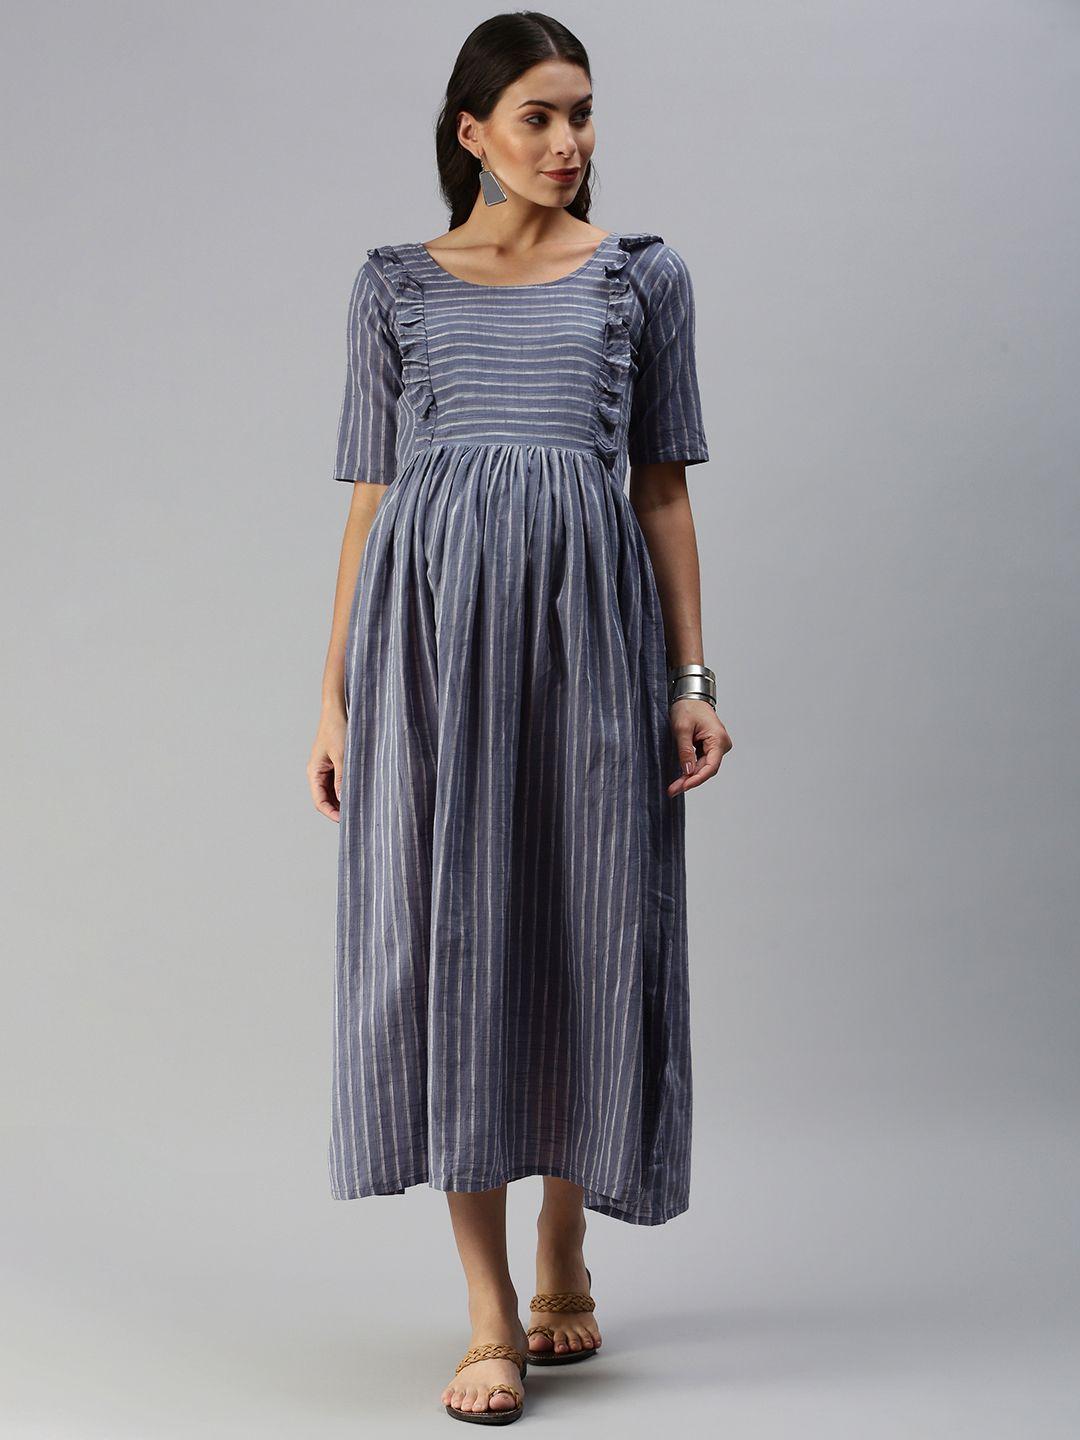 swishchick-charcoal-grey-&-white-woven-design-handloom-maternity-a-line-midi-dress